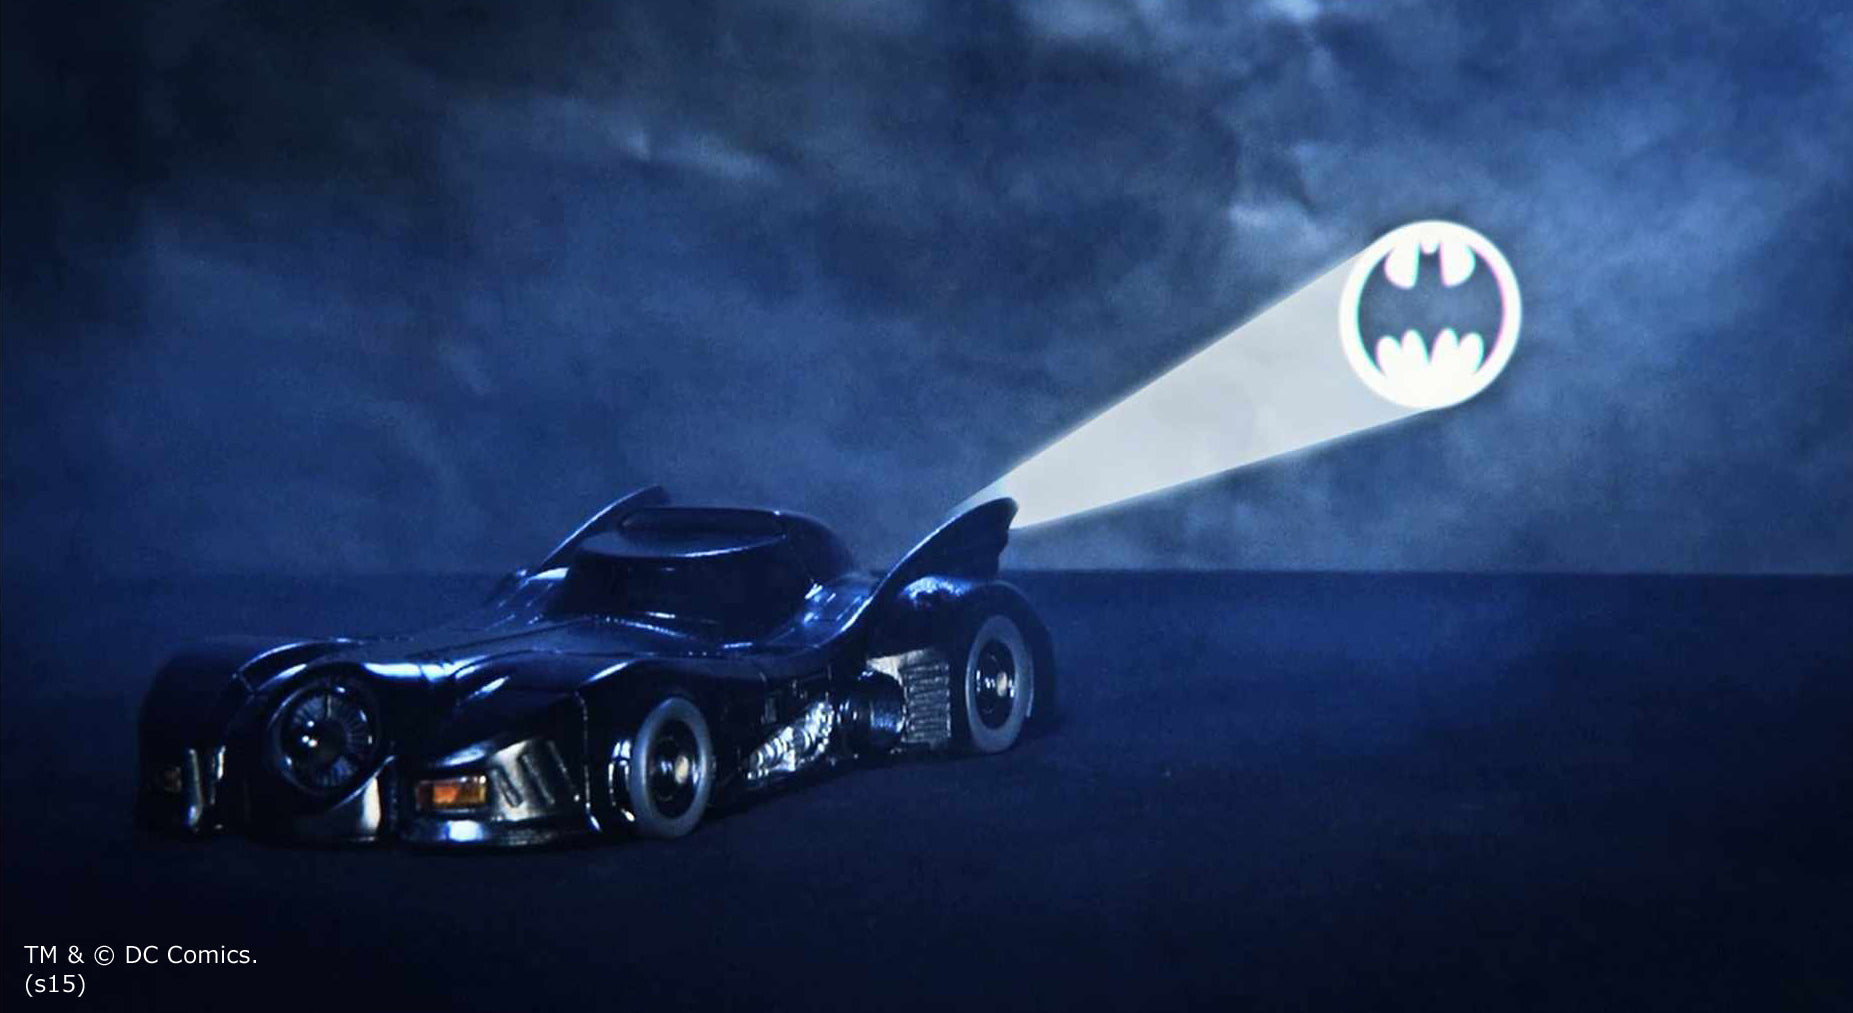 Bandai Crazy Case Batman Batmobile Tumbler LED Bat-Signal Premium Hybrid Plastic Armor Case Cover